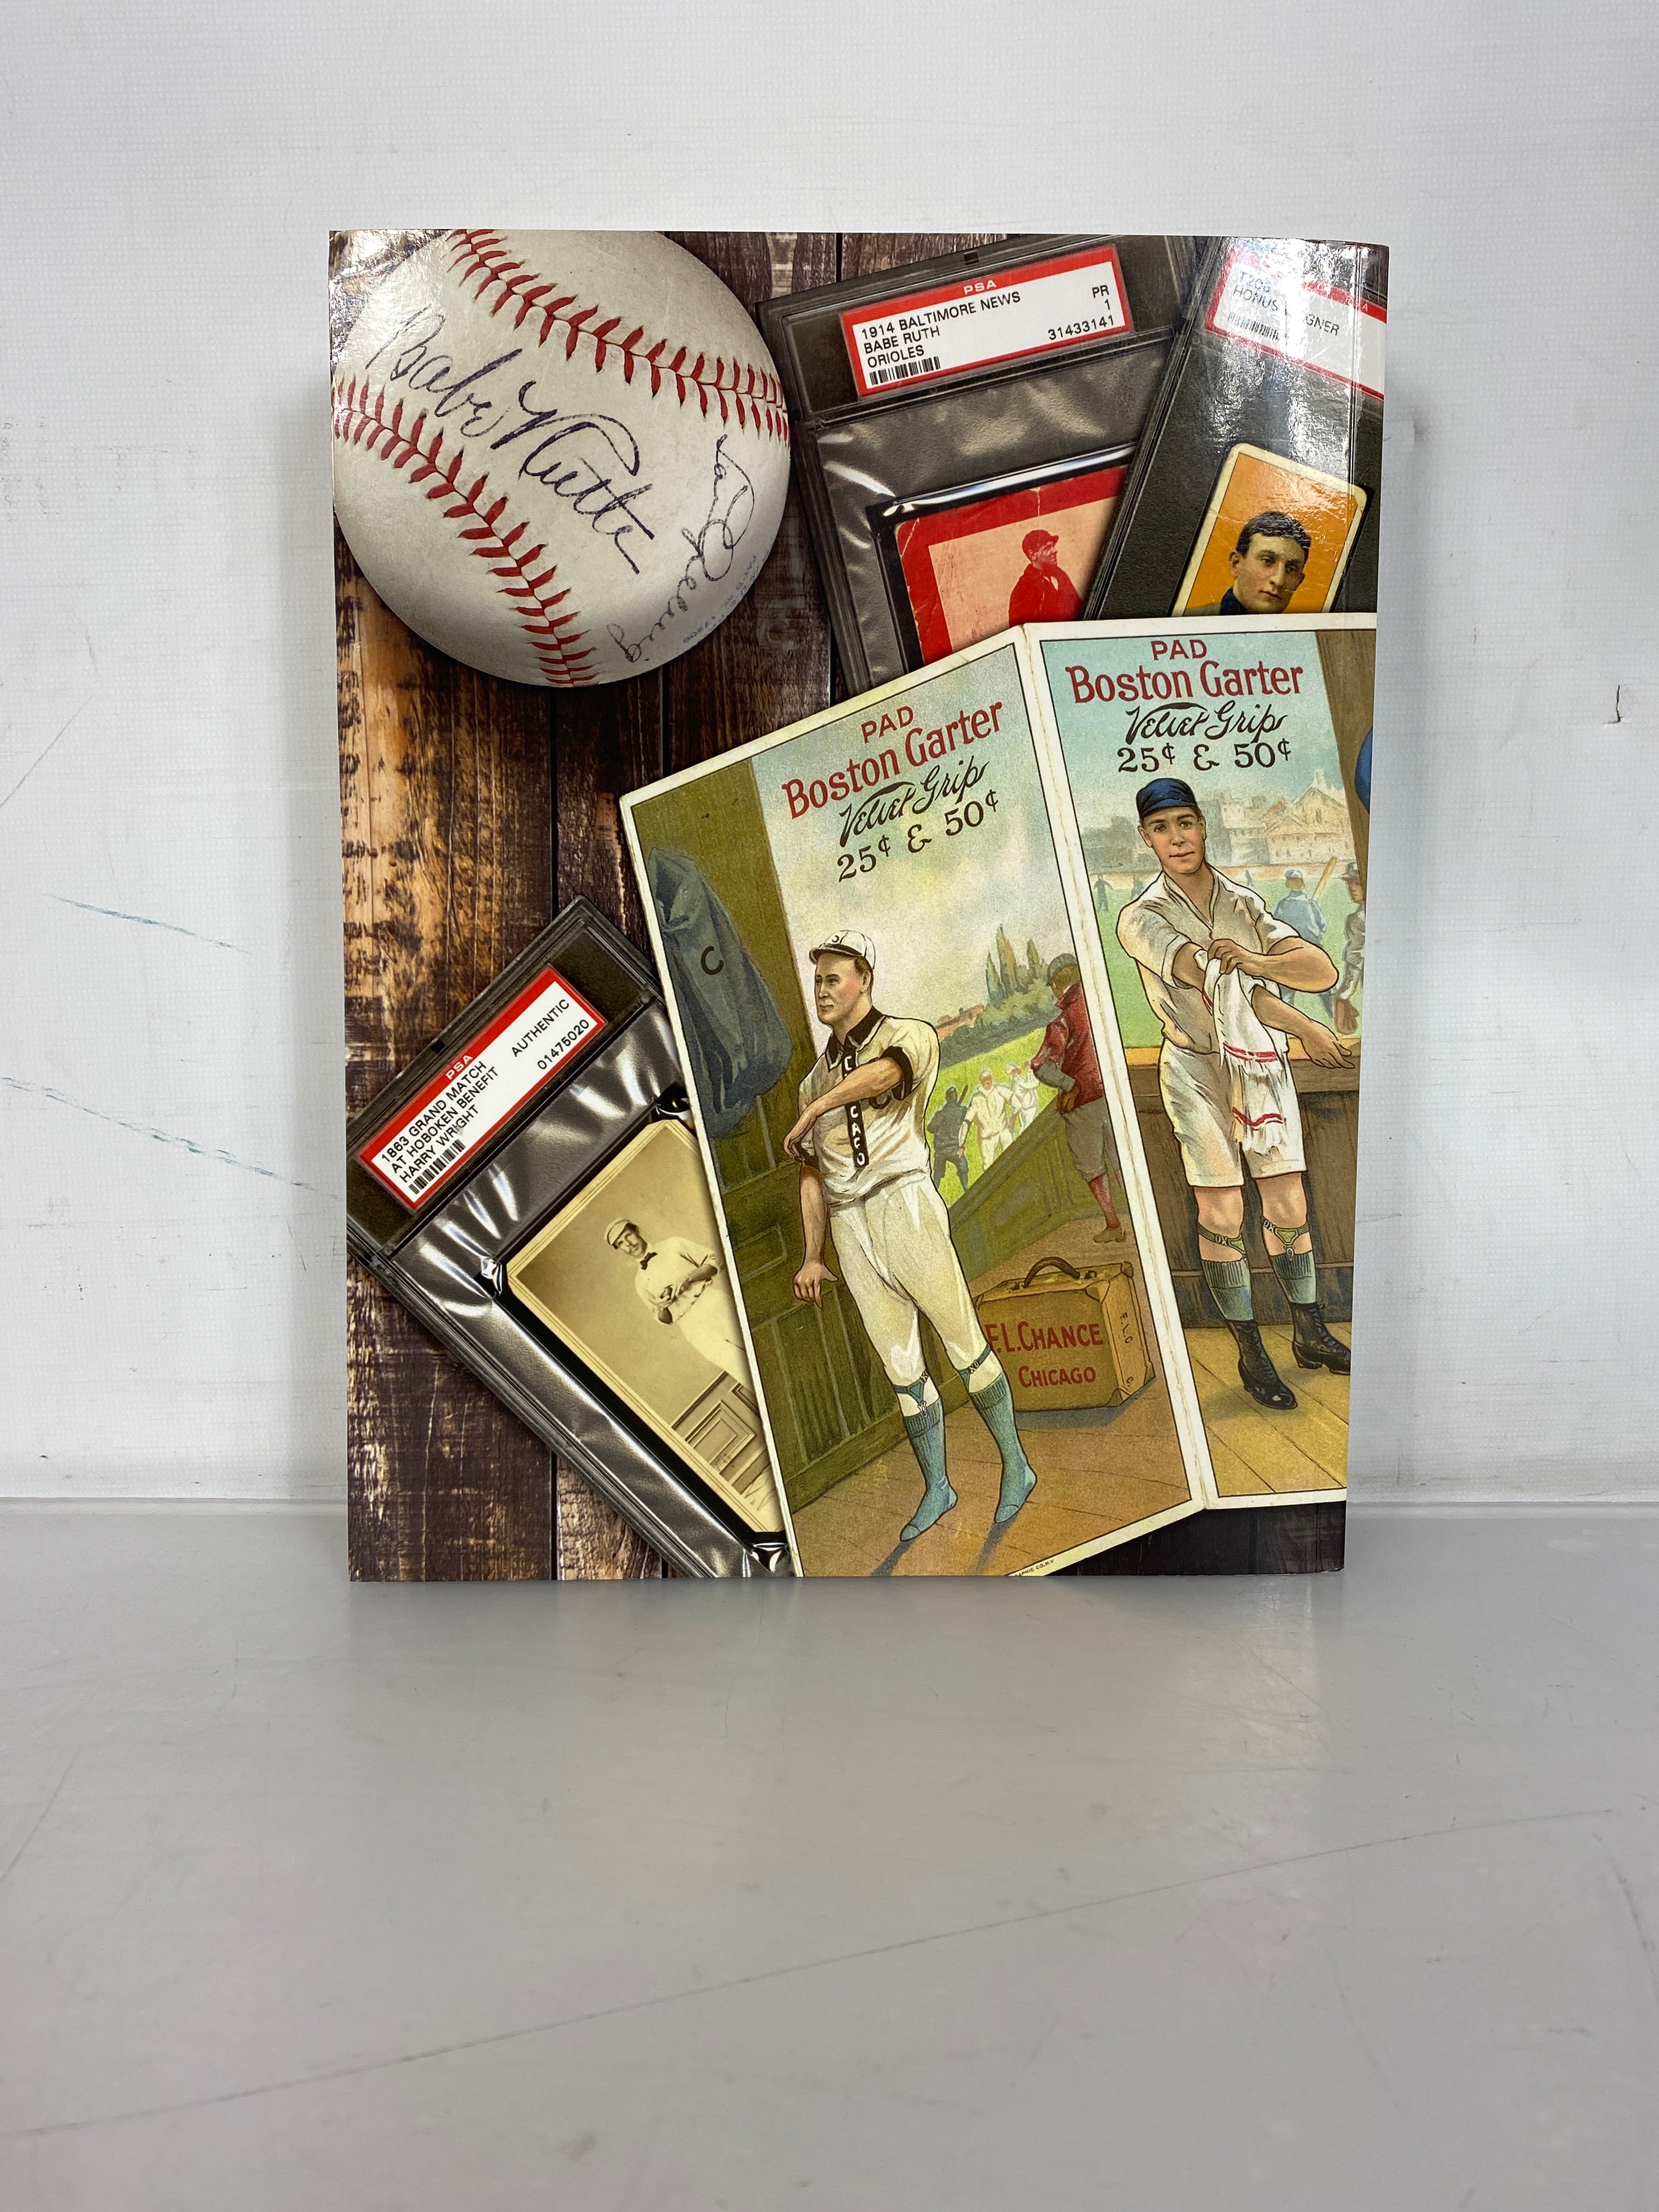 Robert Edward Auctions Catalog Baseball Cards, Memorabilia & Americana 2013 SC